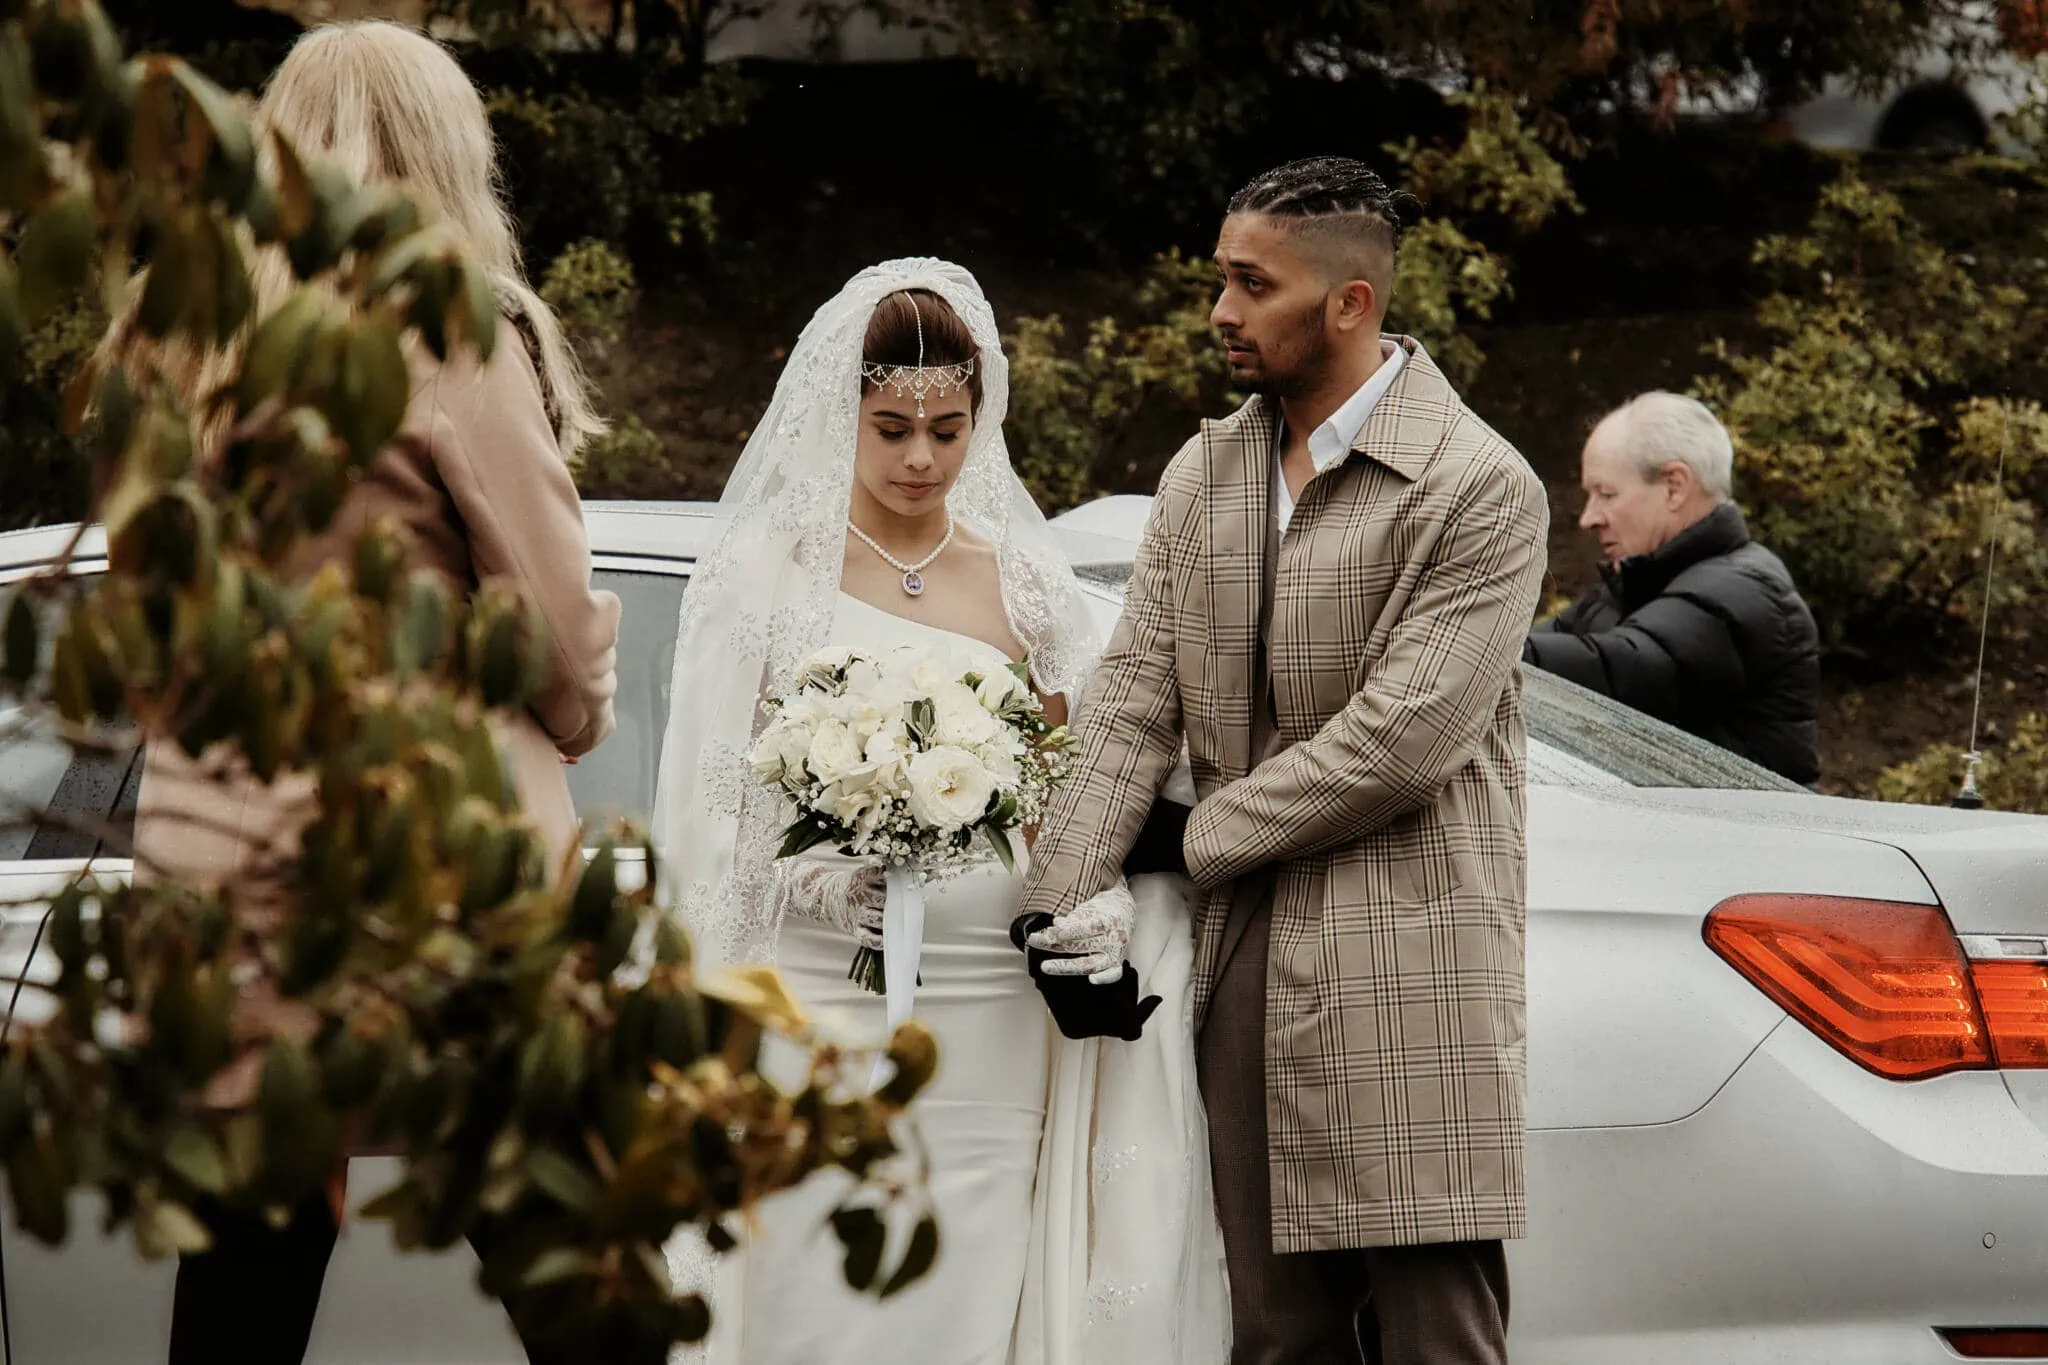 Queenstown New Zealand Elopement Wedding Photographer - Wasim and Yumn in Queenstown, standing next to a car.